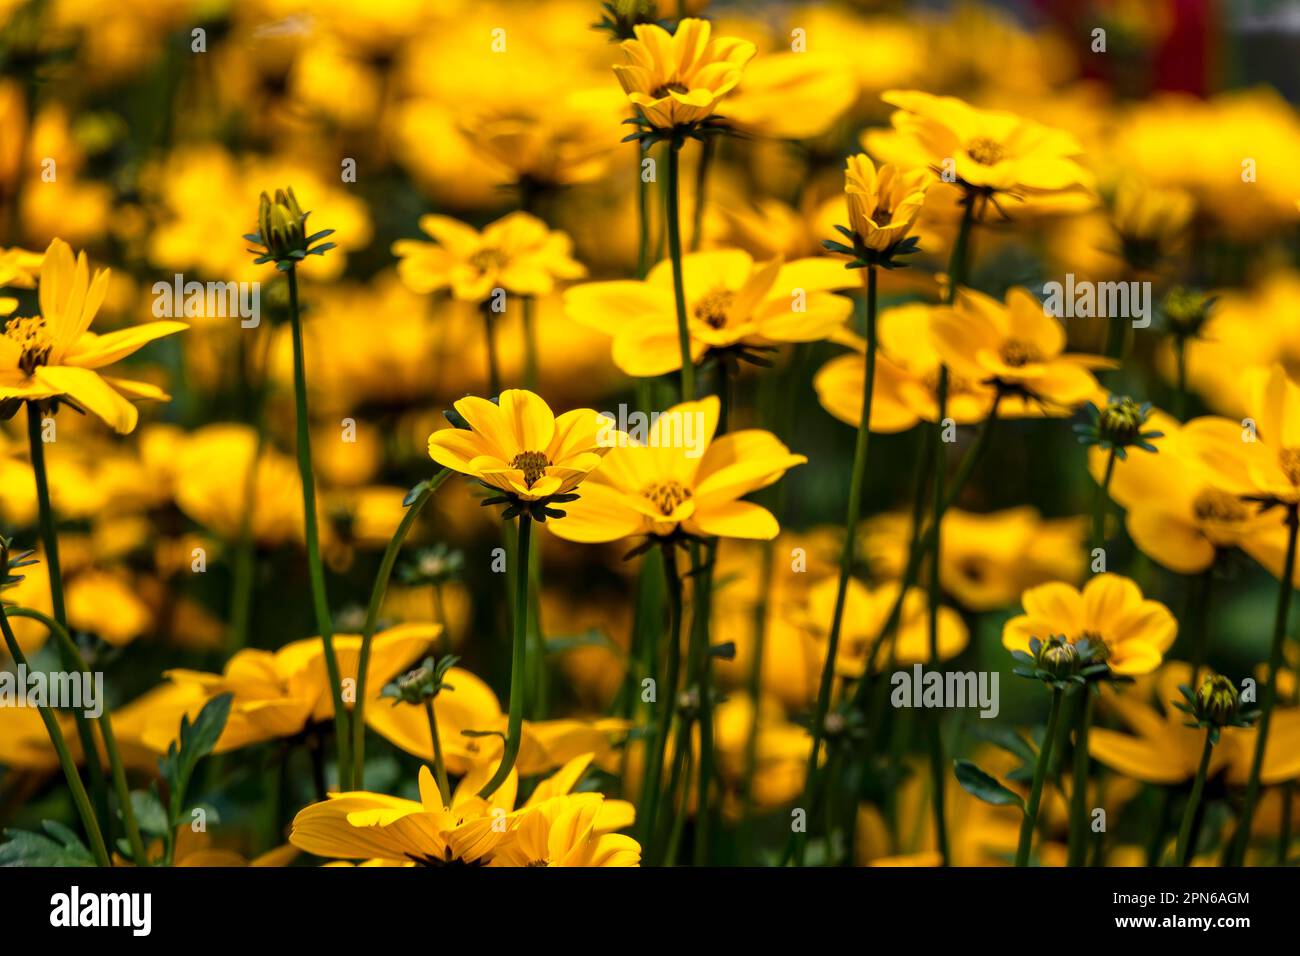 Bidens ferulifolia or Golden Nugget or Verbena Amarilla yellow flowers in garden flowerbed. Selective focus Stock Photo